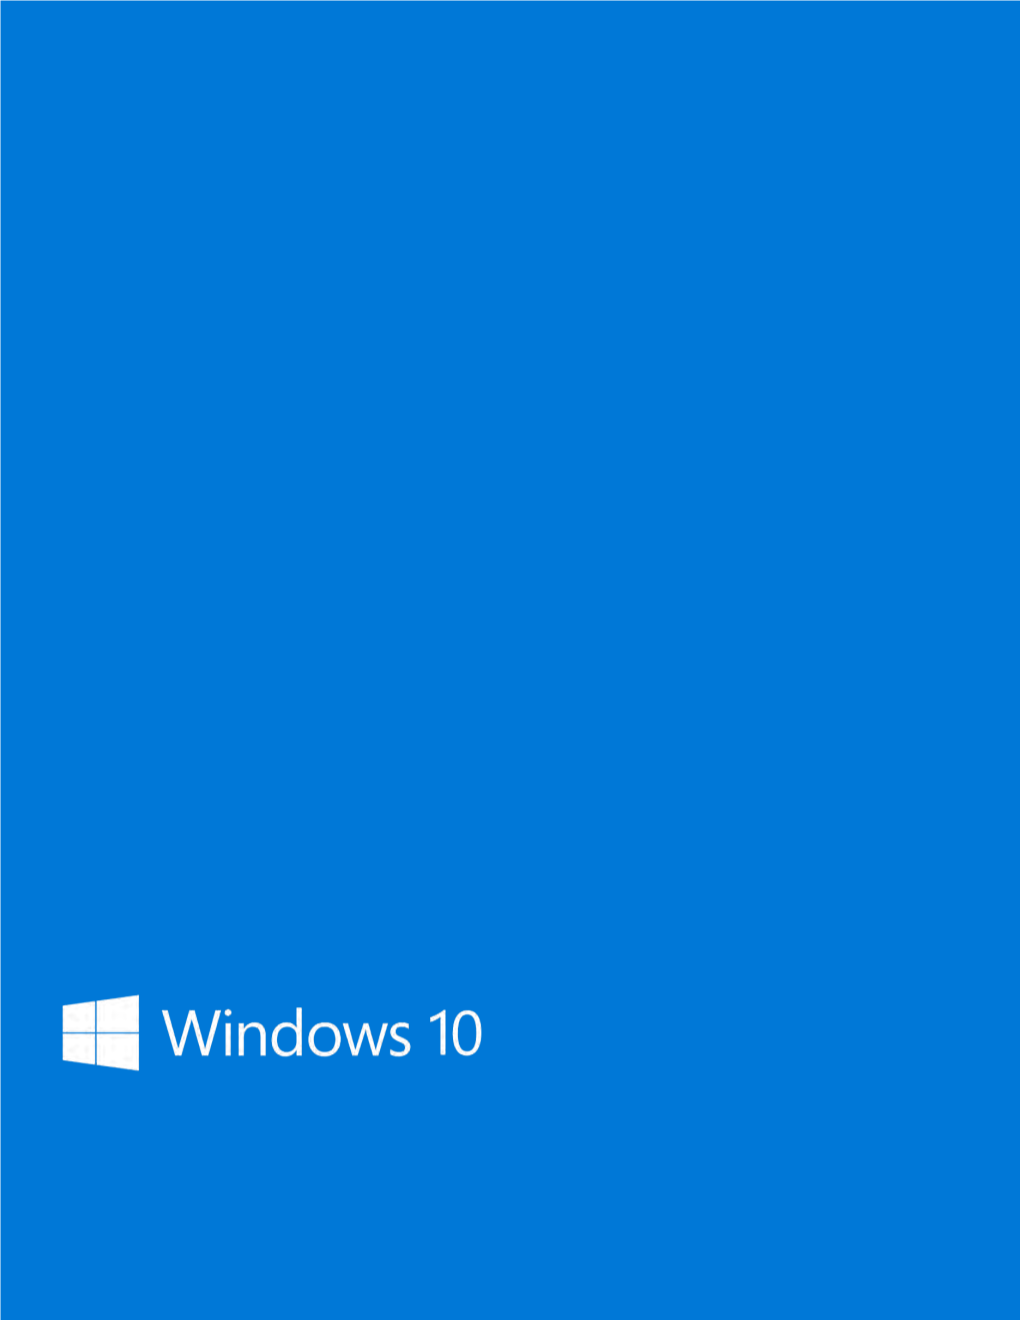 Windows 10 Quick Guide